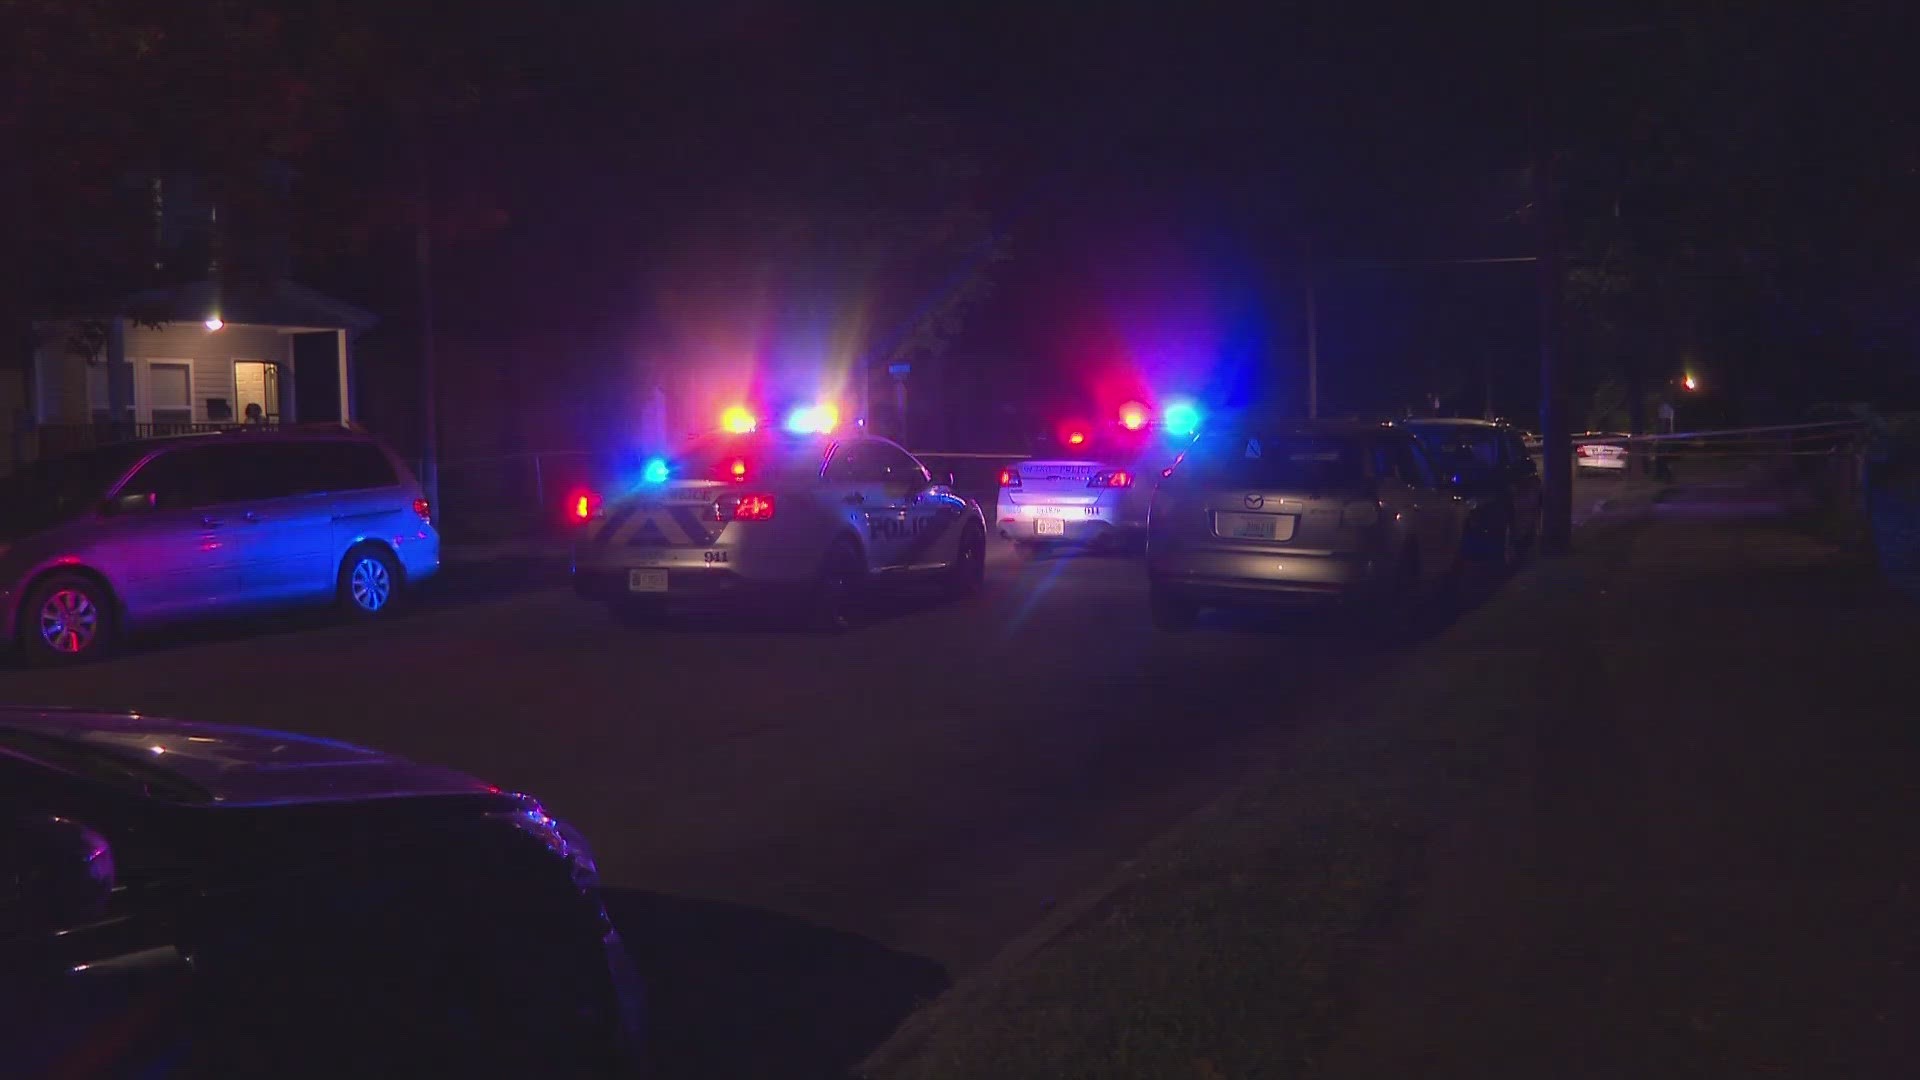 Three more victims were shot in on Grandmeadow Lane in the Pleasure Ridge Park neighborhood. About 8 others were also injured in separate weekend shootings.